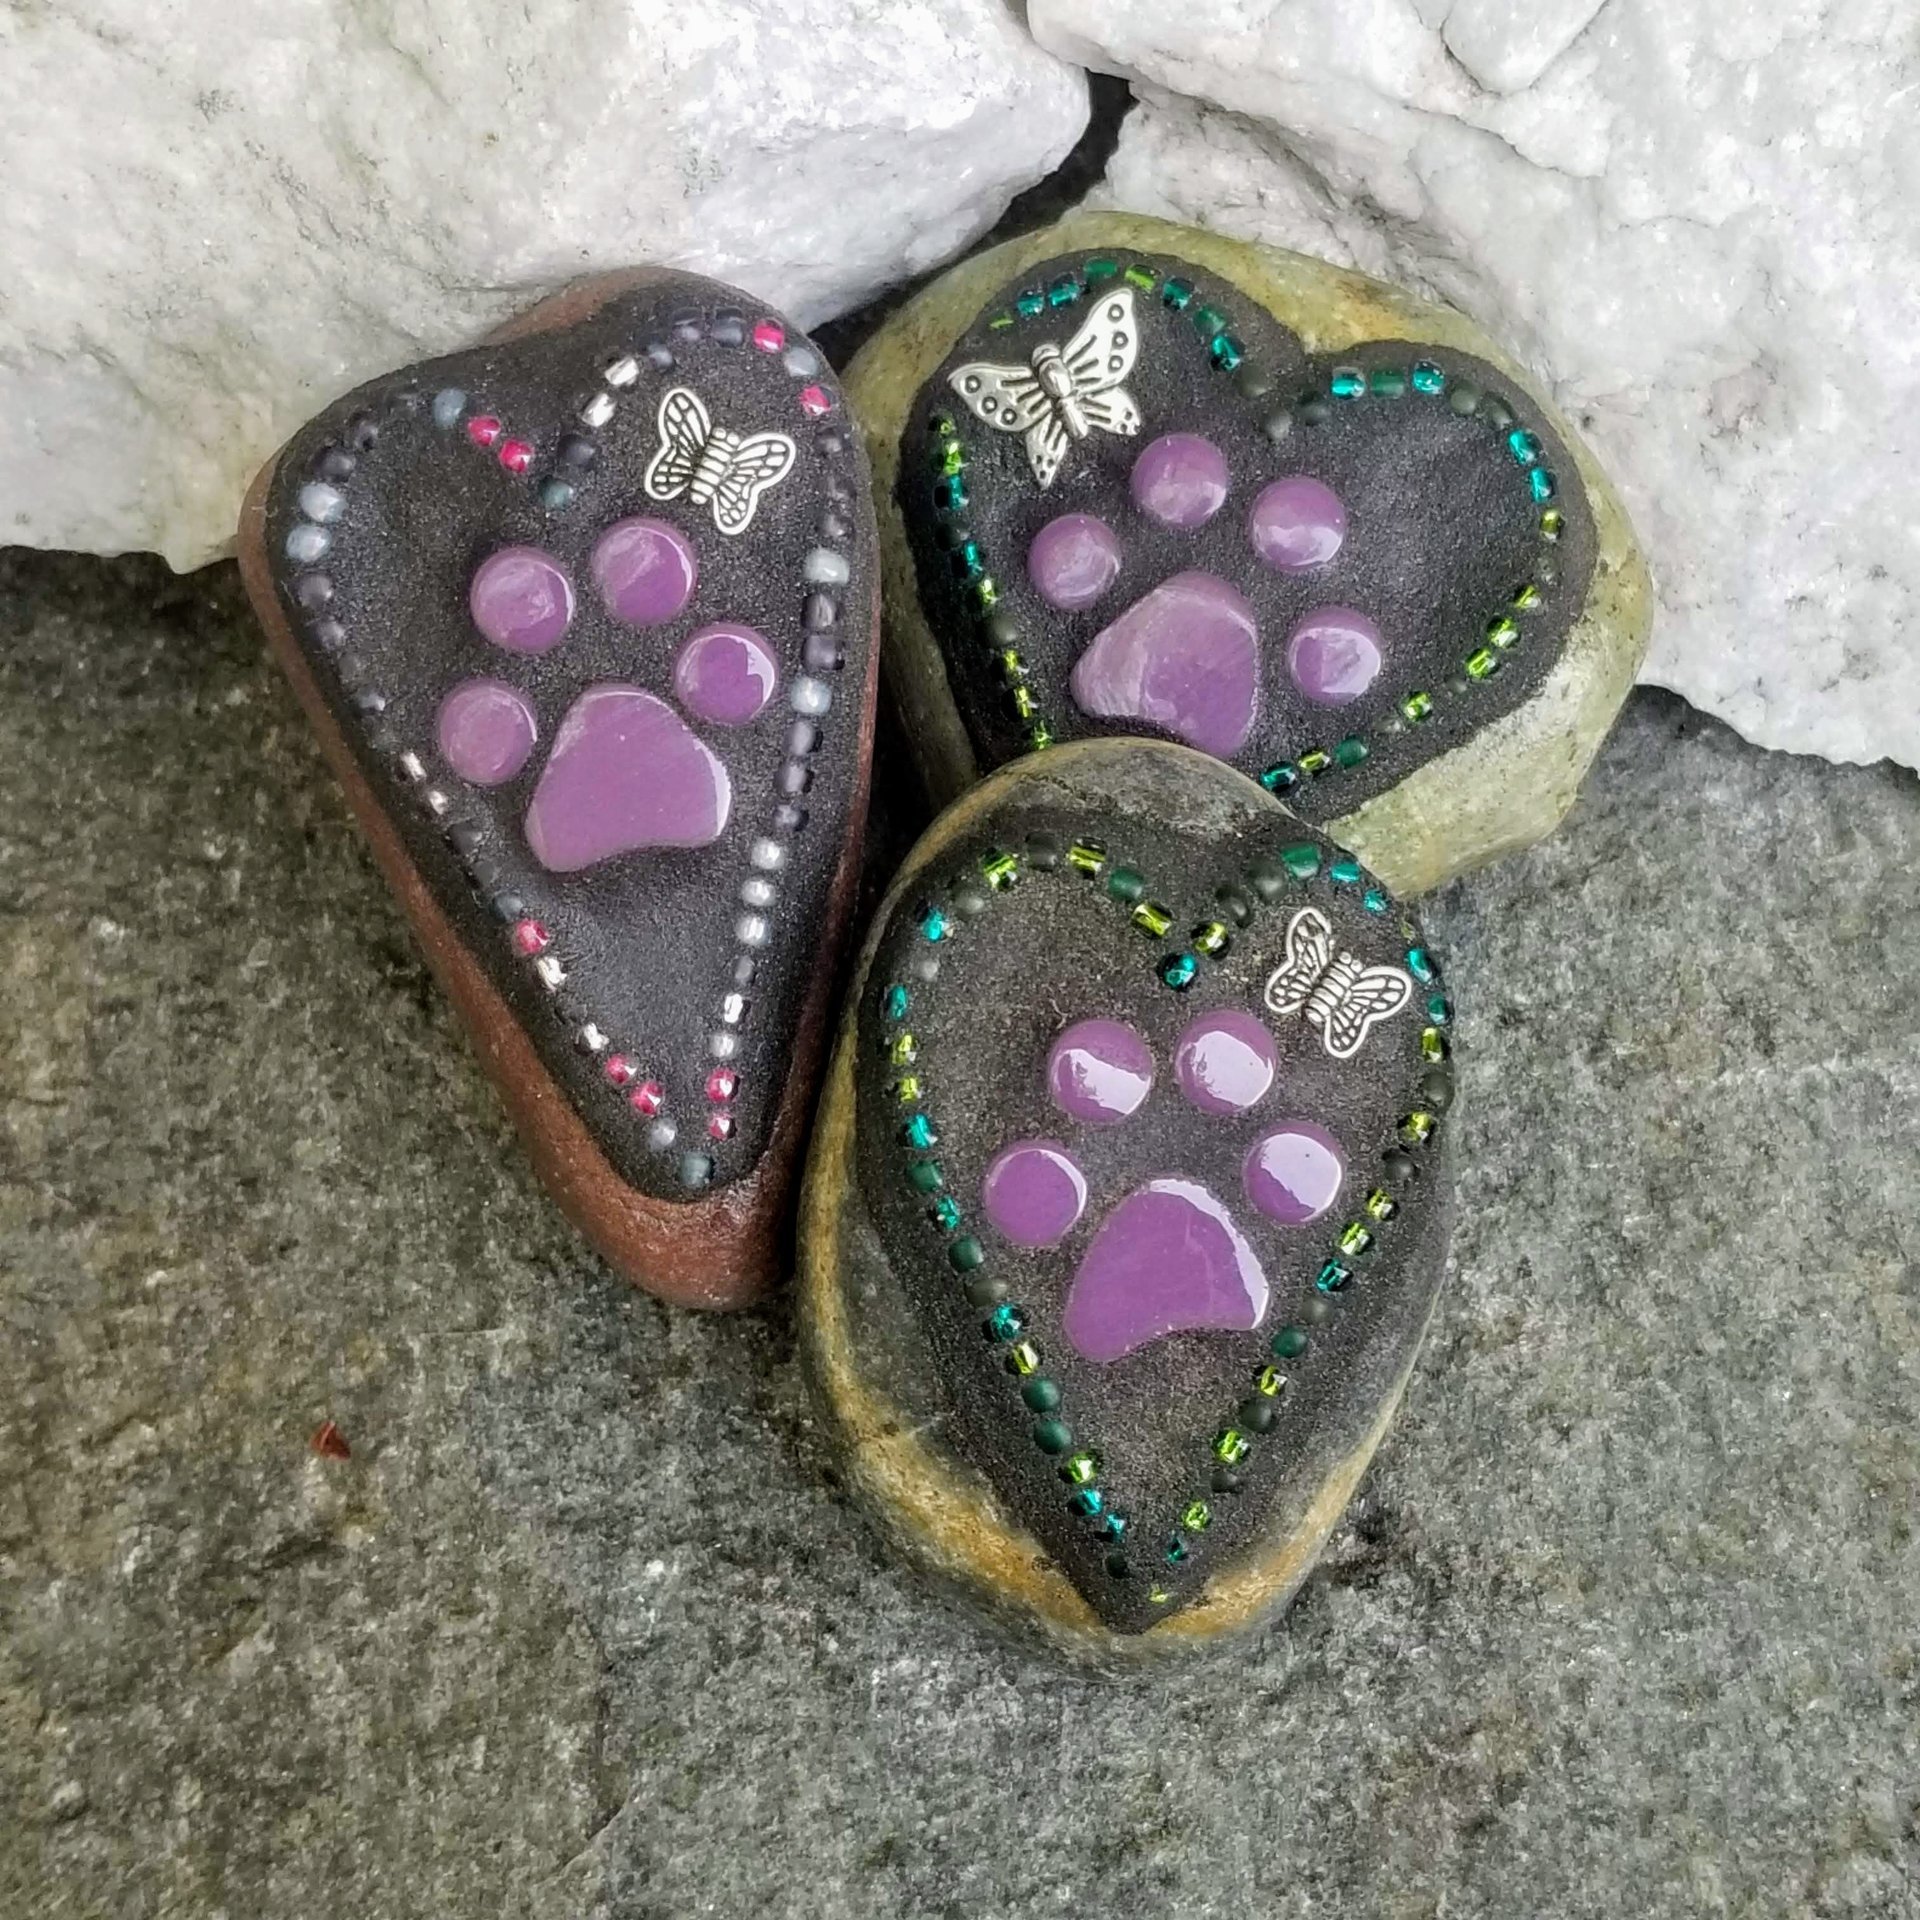 3 Little Purple Paw Prints, Garden Stone, Pet Memorial, Garden Decor